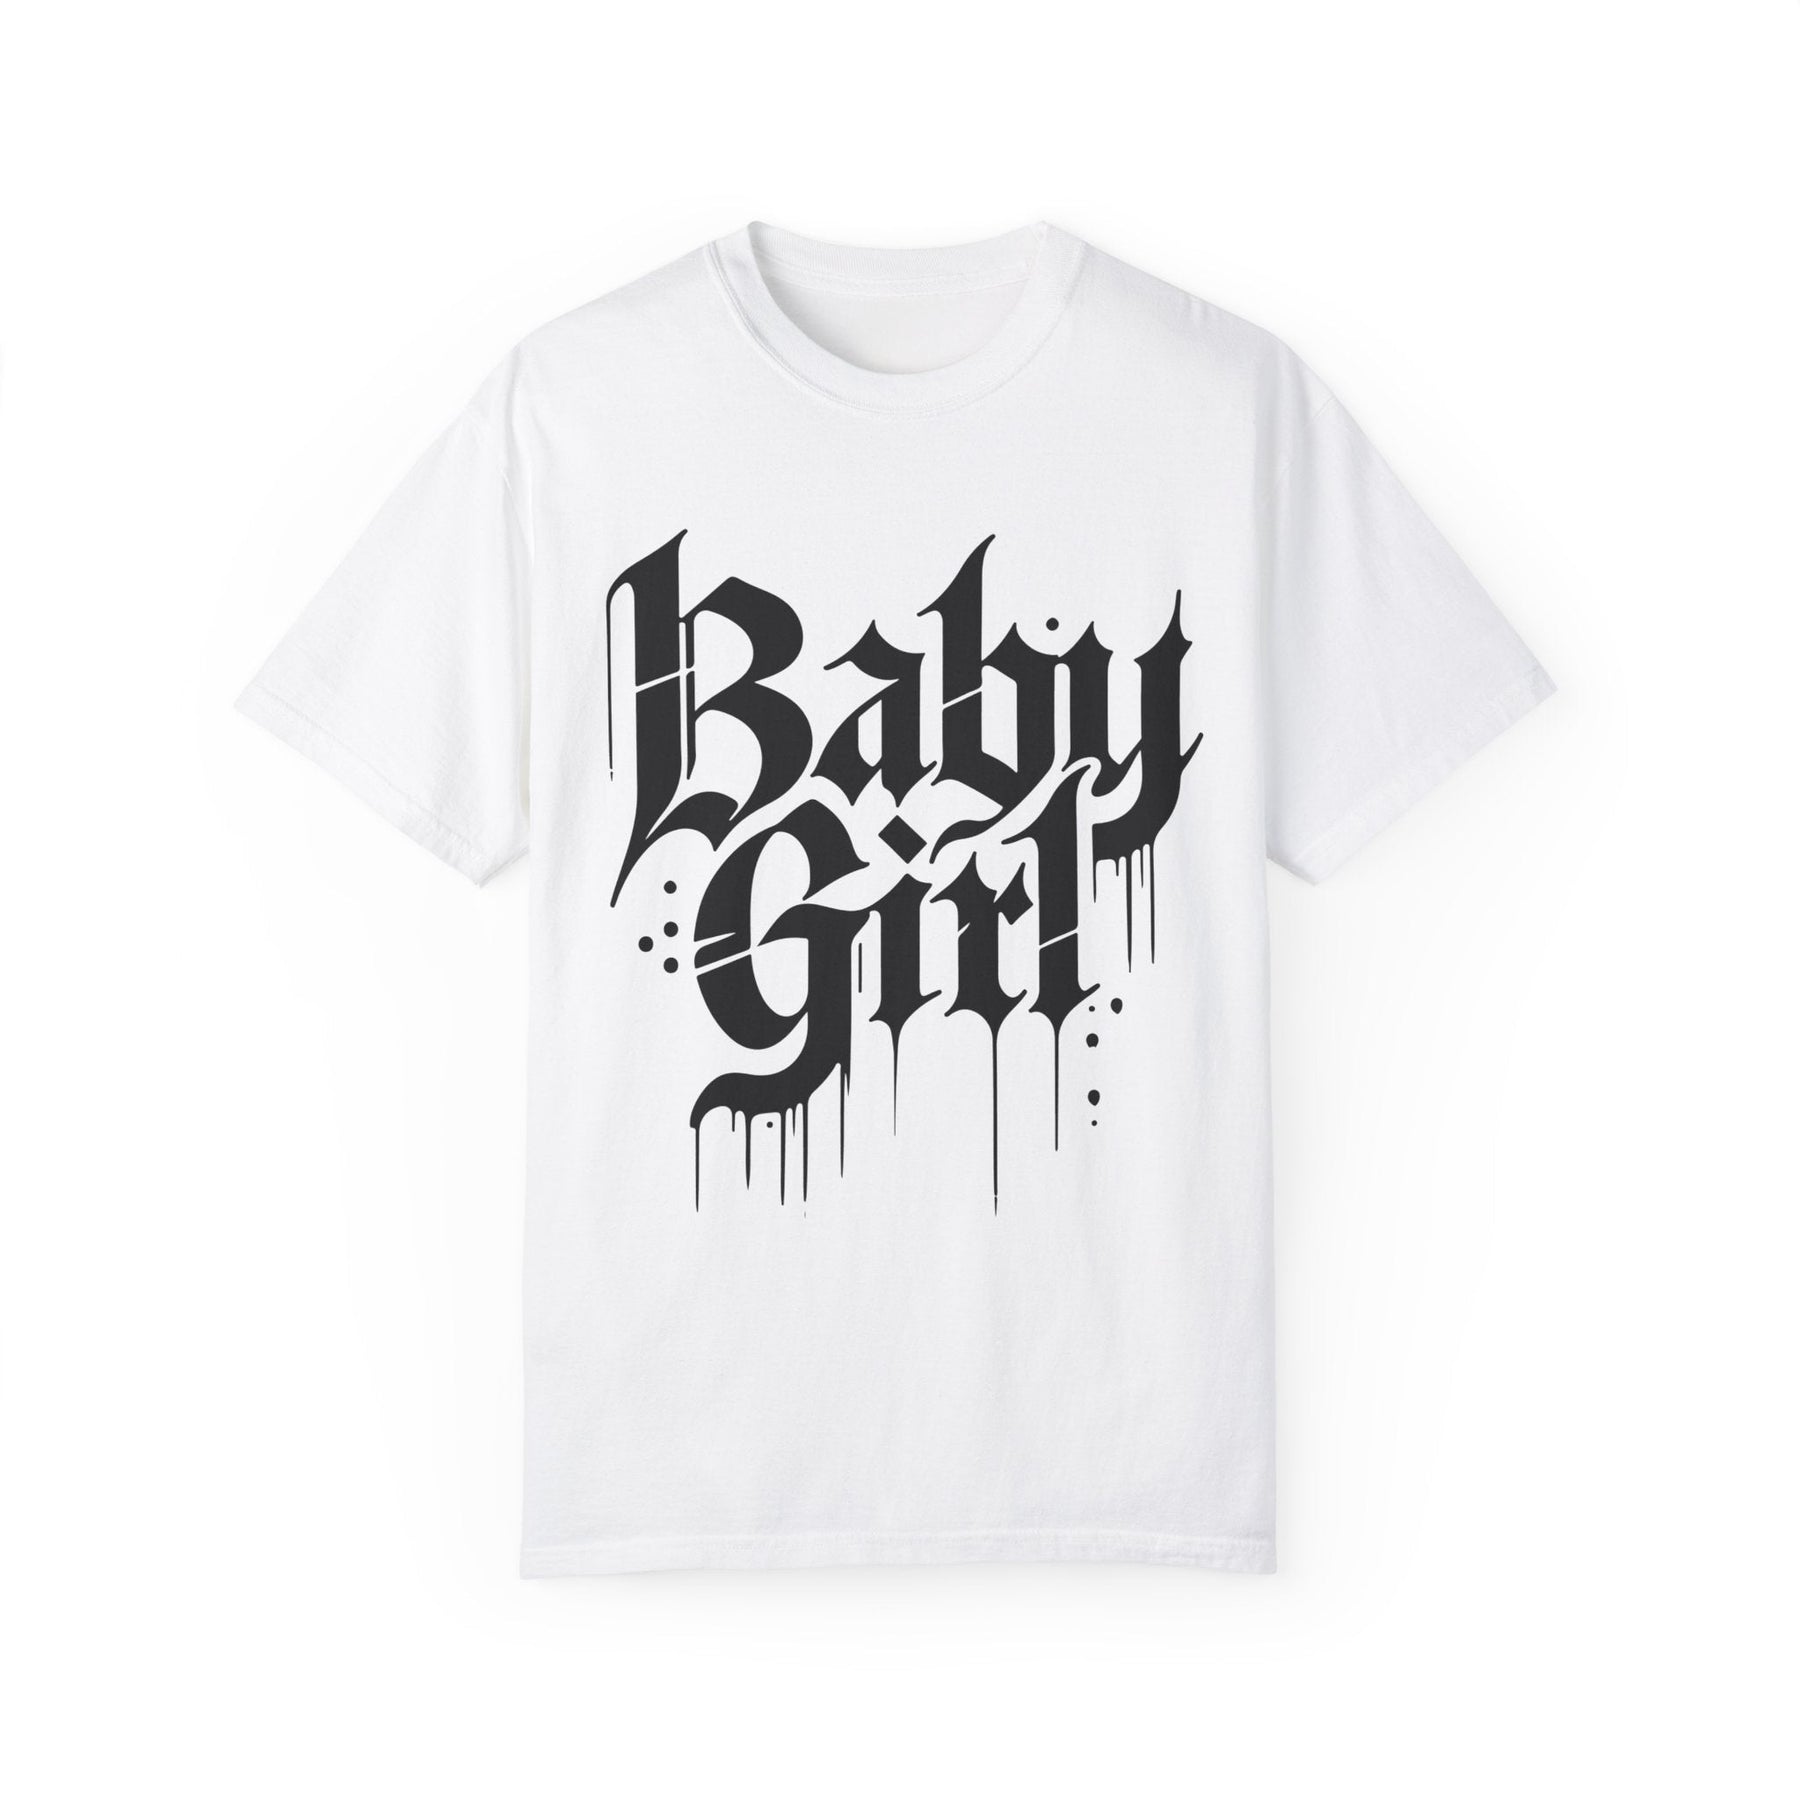 Baby Girl Comfort Tee - Goth Cloth Co.T - Shirt15970828073539543101